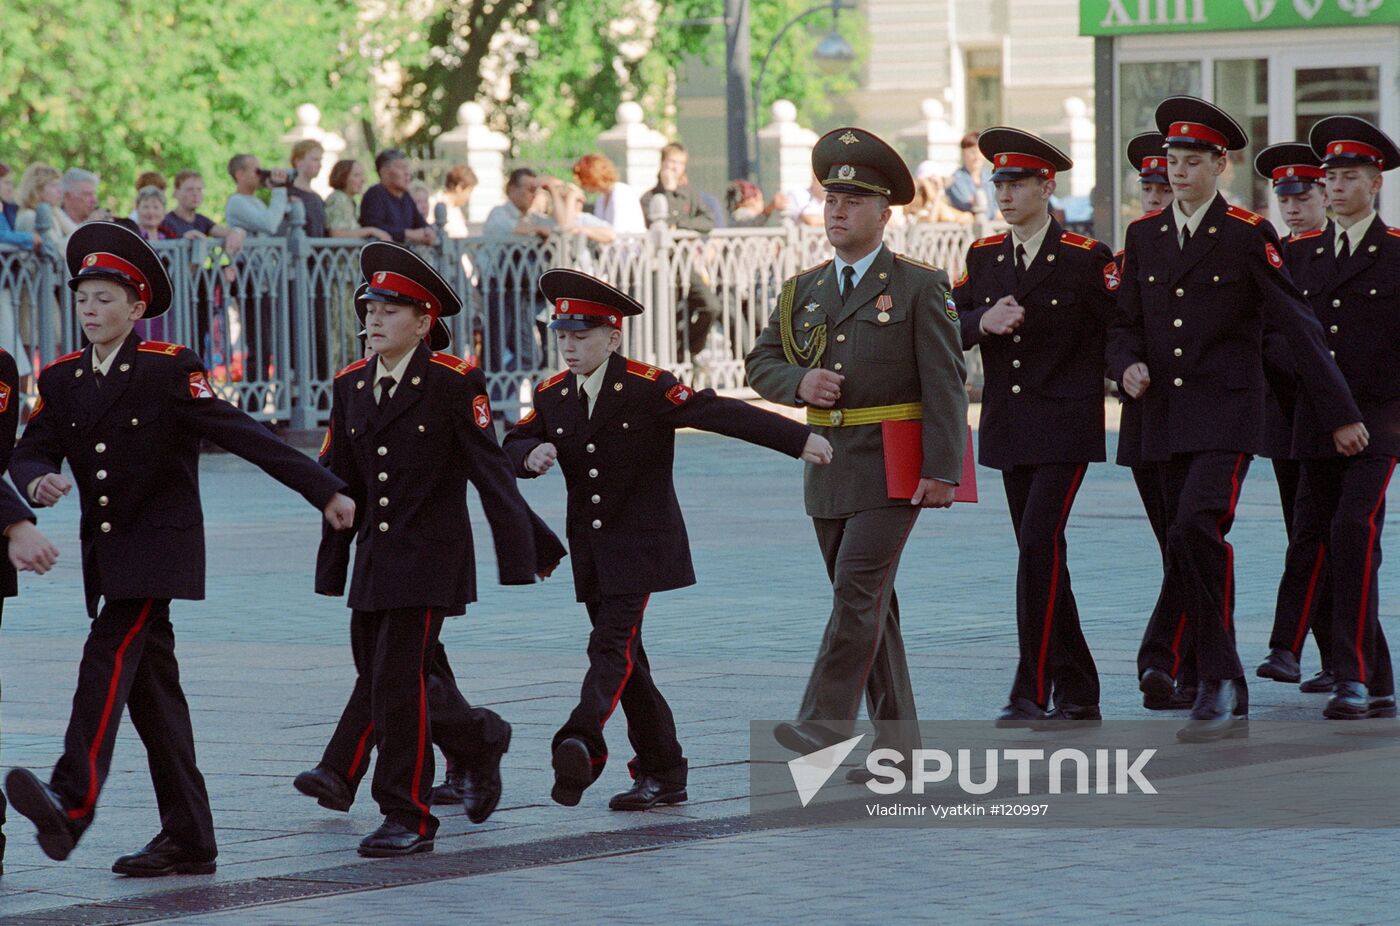 Suvorov school students initiation ceremony